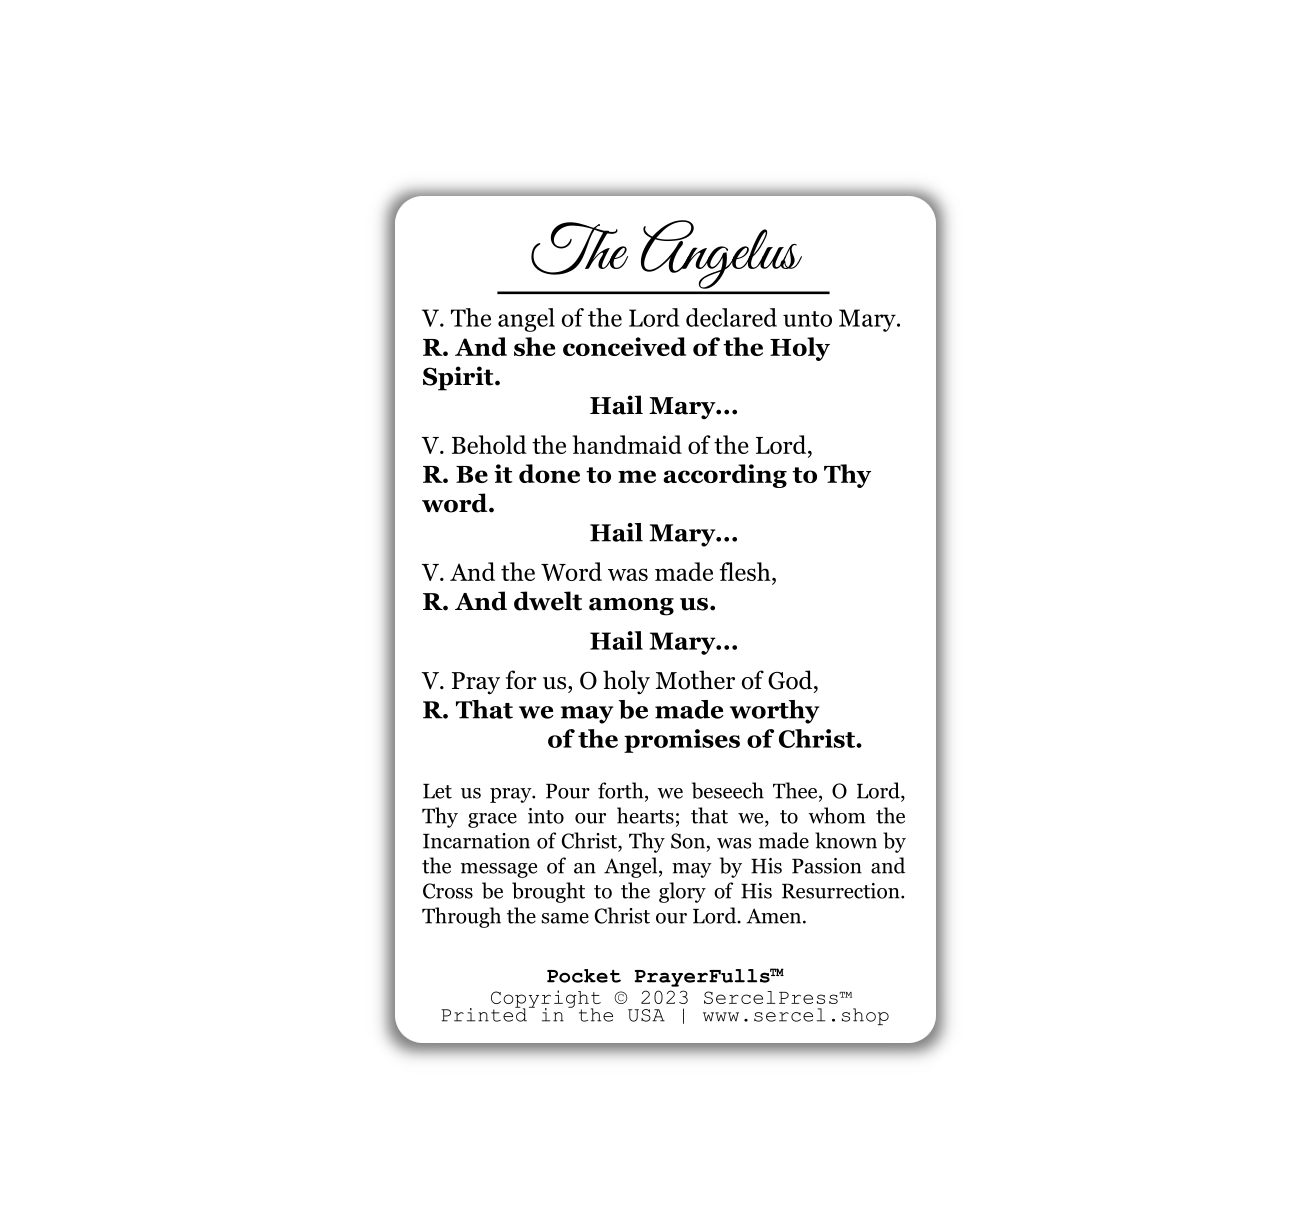 The Angelus: Pocket PrayerFulls™, Durable Wallet Prayer Cards